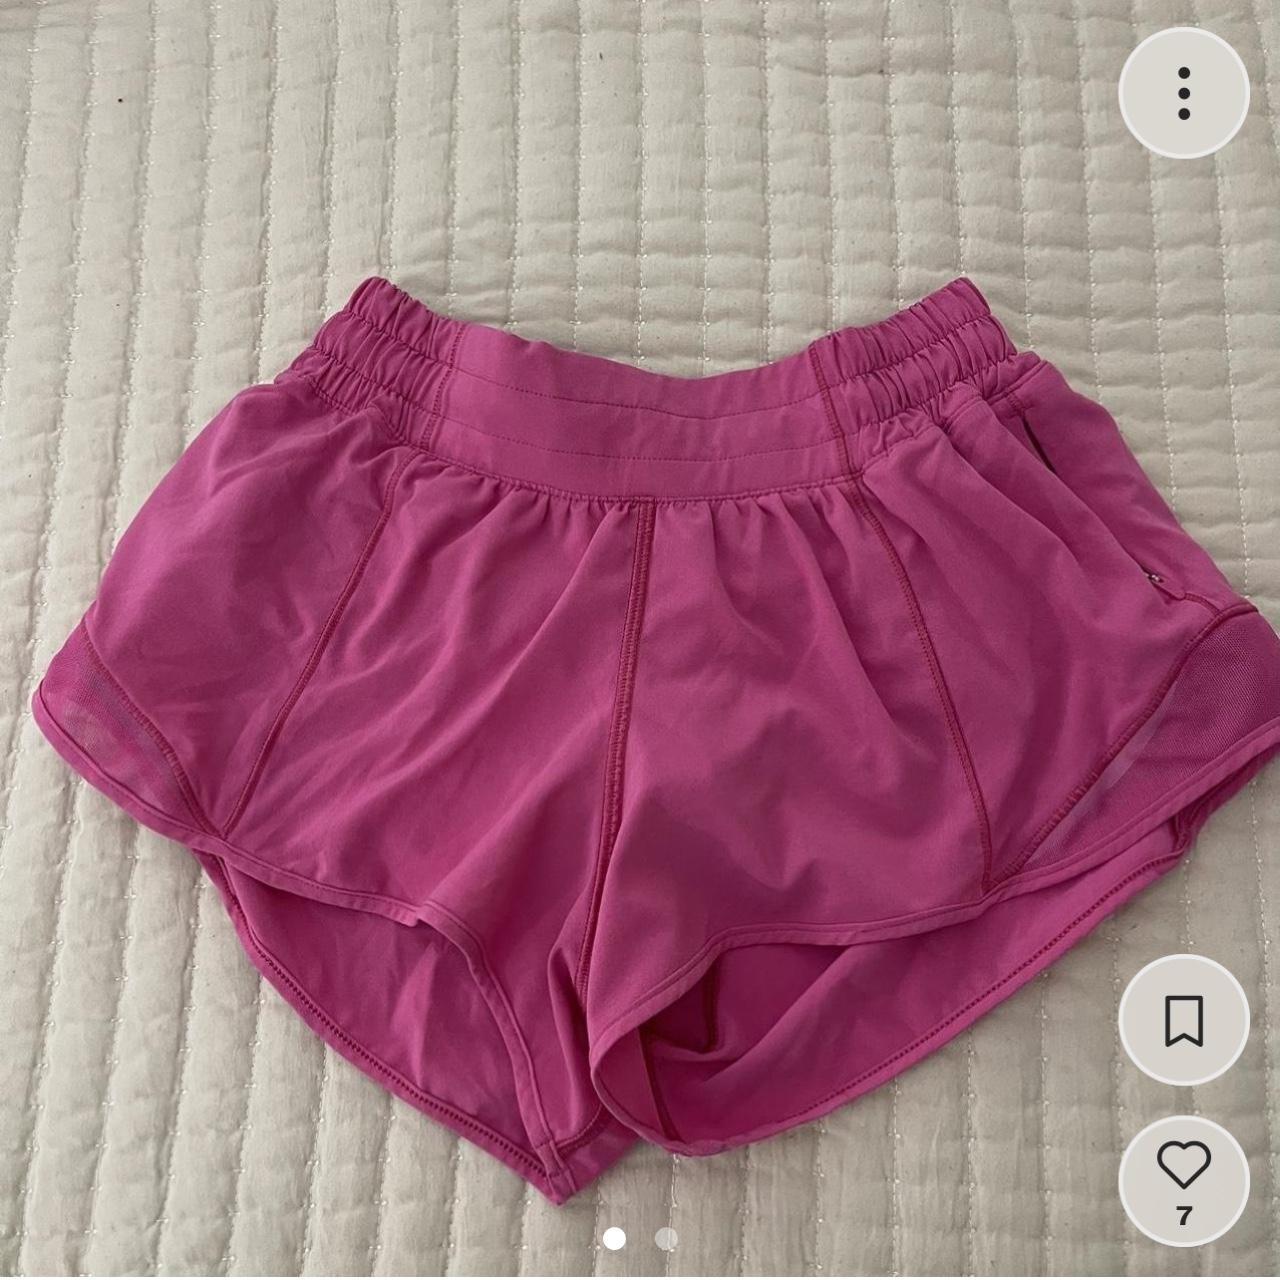 Lululemon hotty hot 2.5 pink shorts, worn twice and - Depop